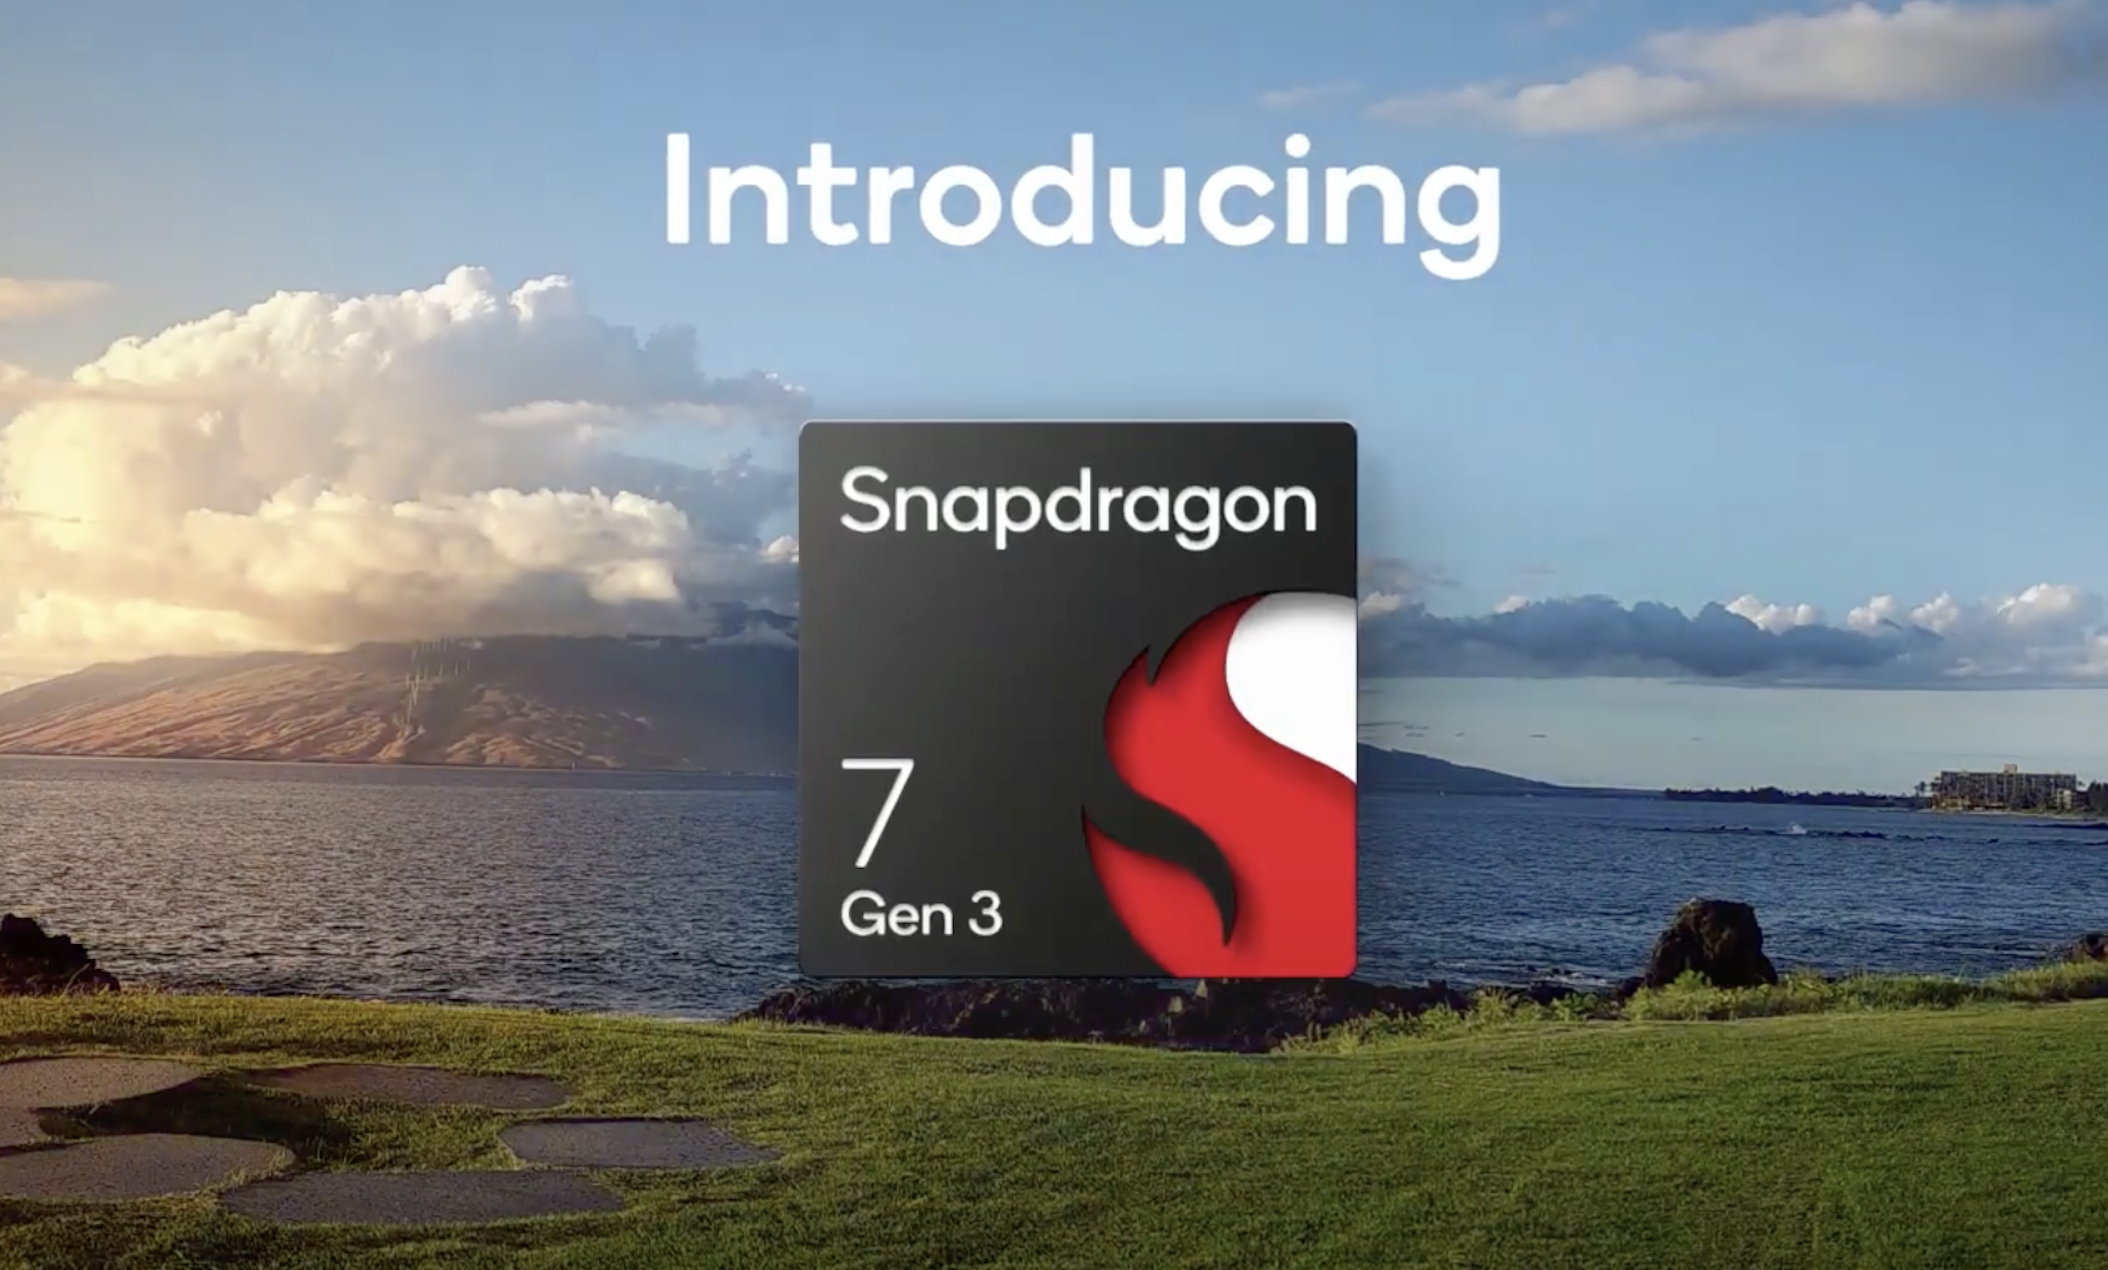 Qualcomm Snapdragon 8 Gen 3 Brings Gen AI to Smartphones - The